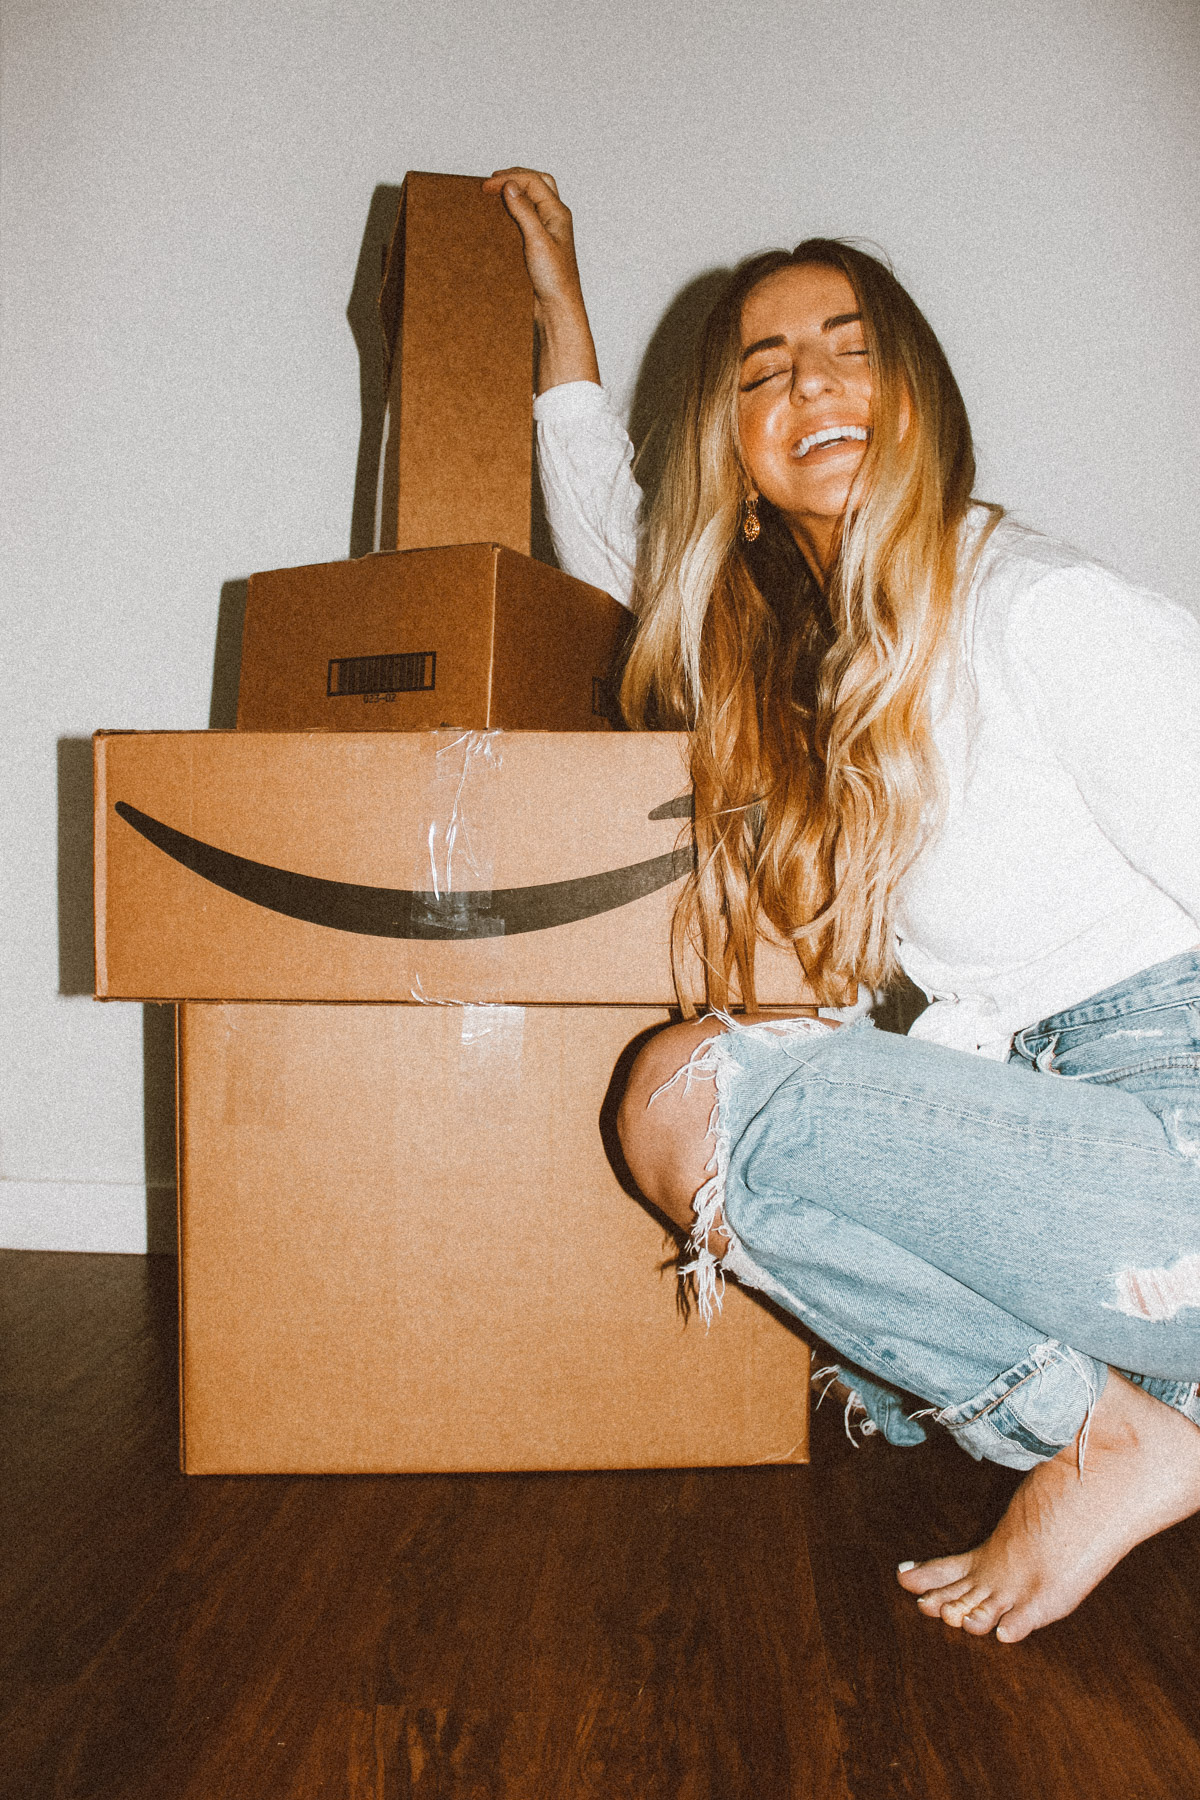 Best Of Amazon: Shopping List